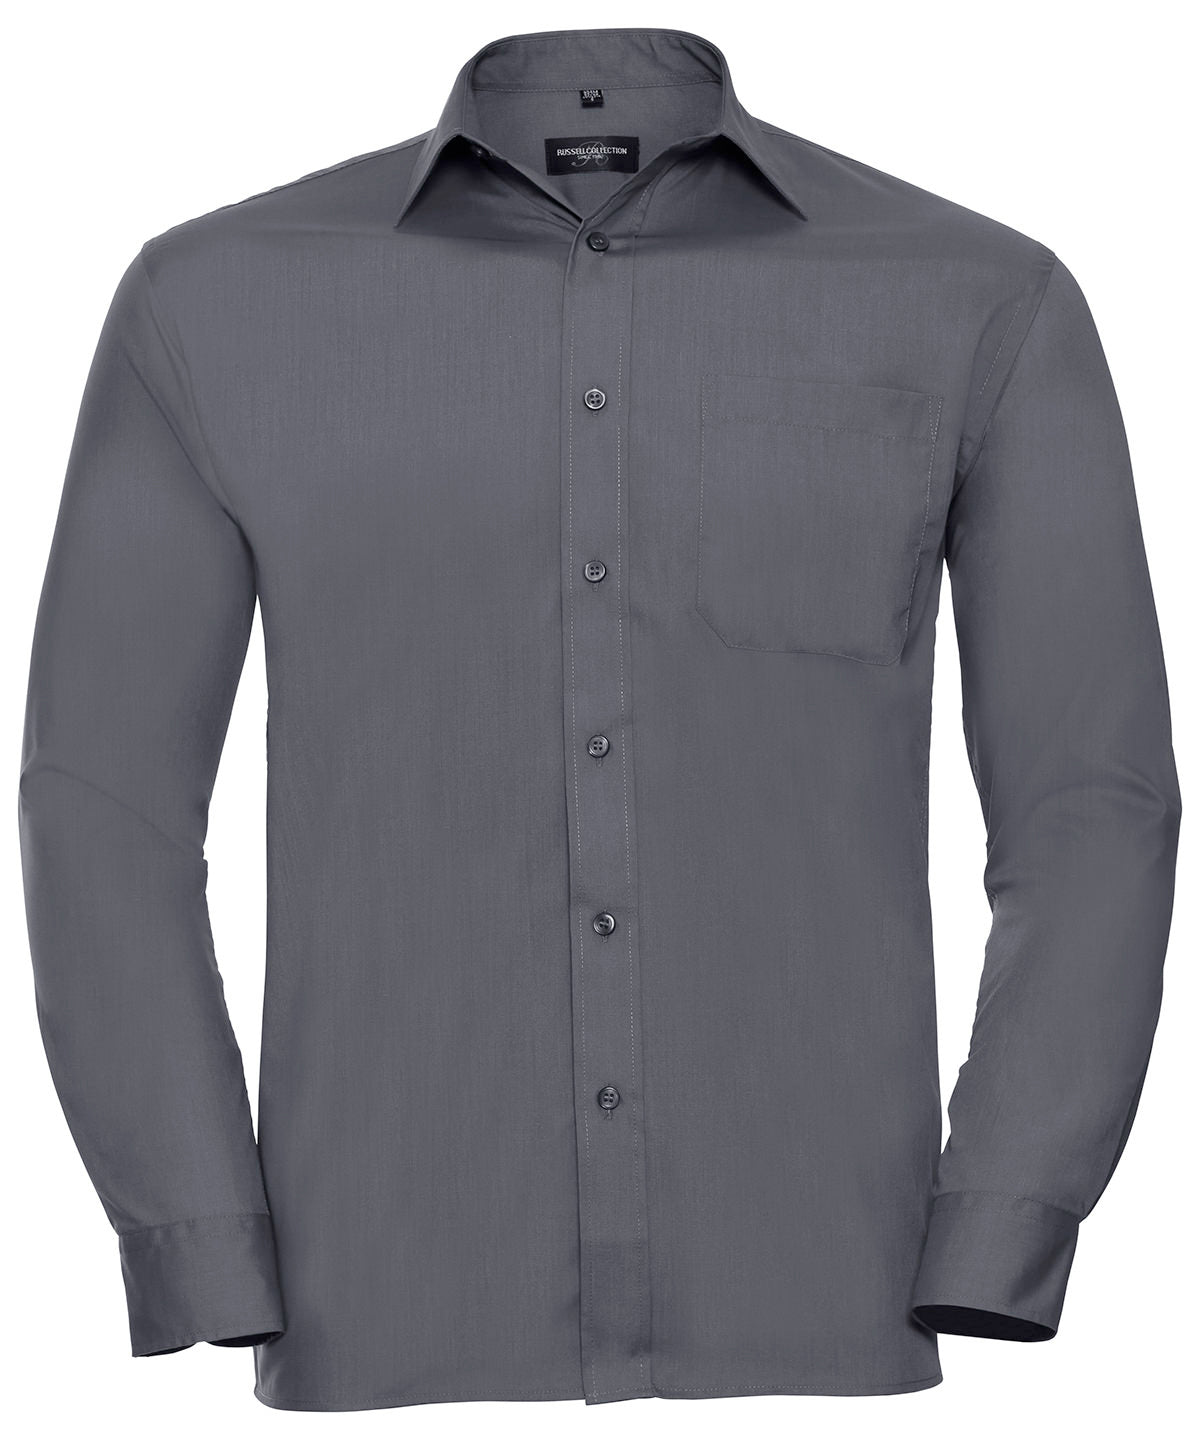 Russell Long Sleeve Polycotton Easycare Poplin Shirt